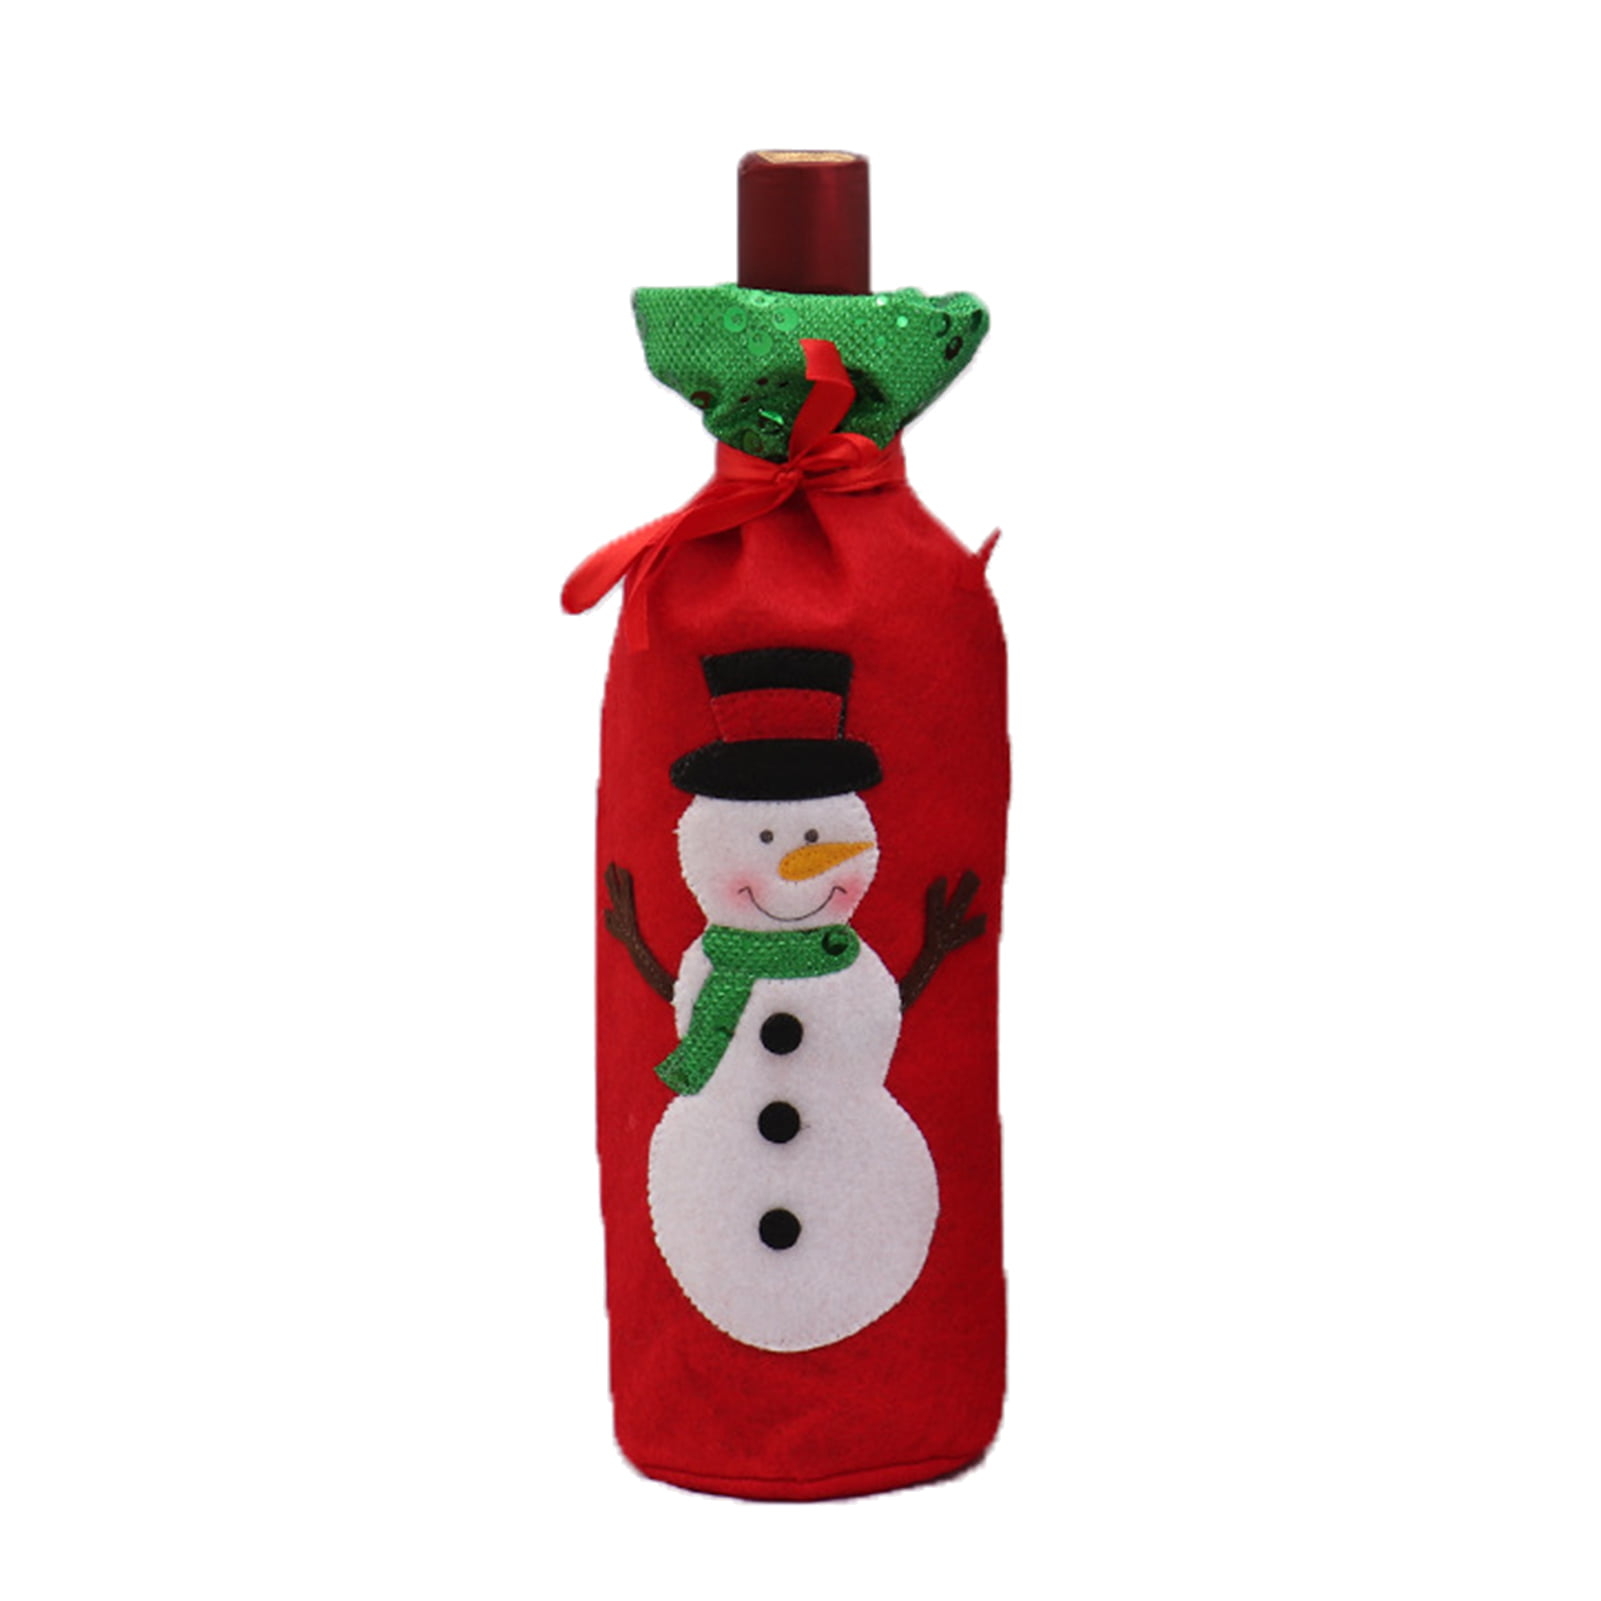 Snowman Elk Wine Bottle Cover Christmas Party Decorations 6A